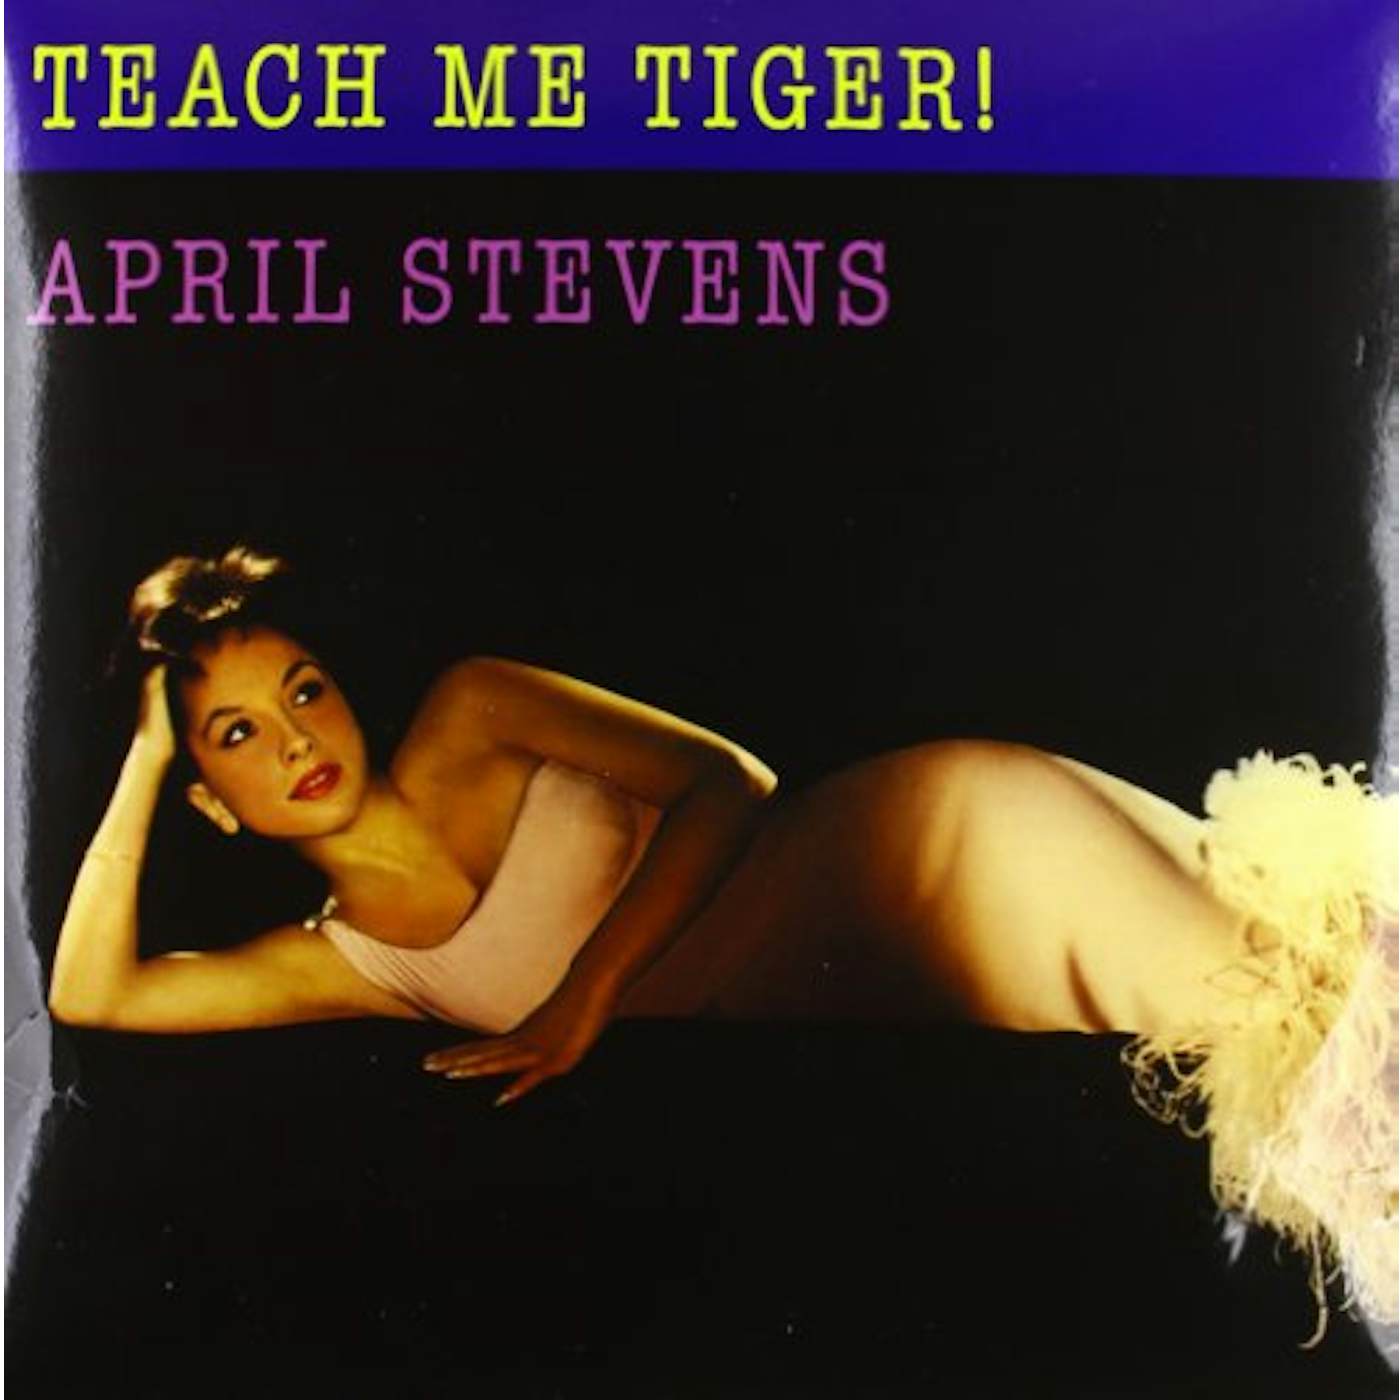 April Stevens Teach Me Tiger Vinyl Record